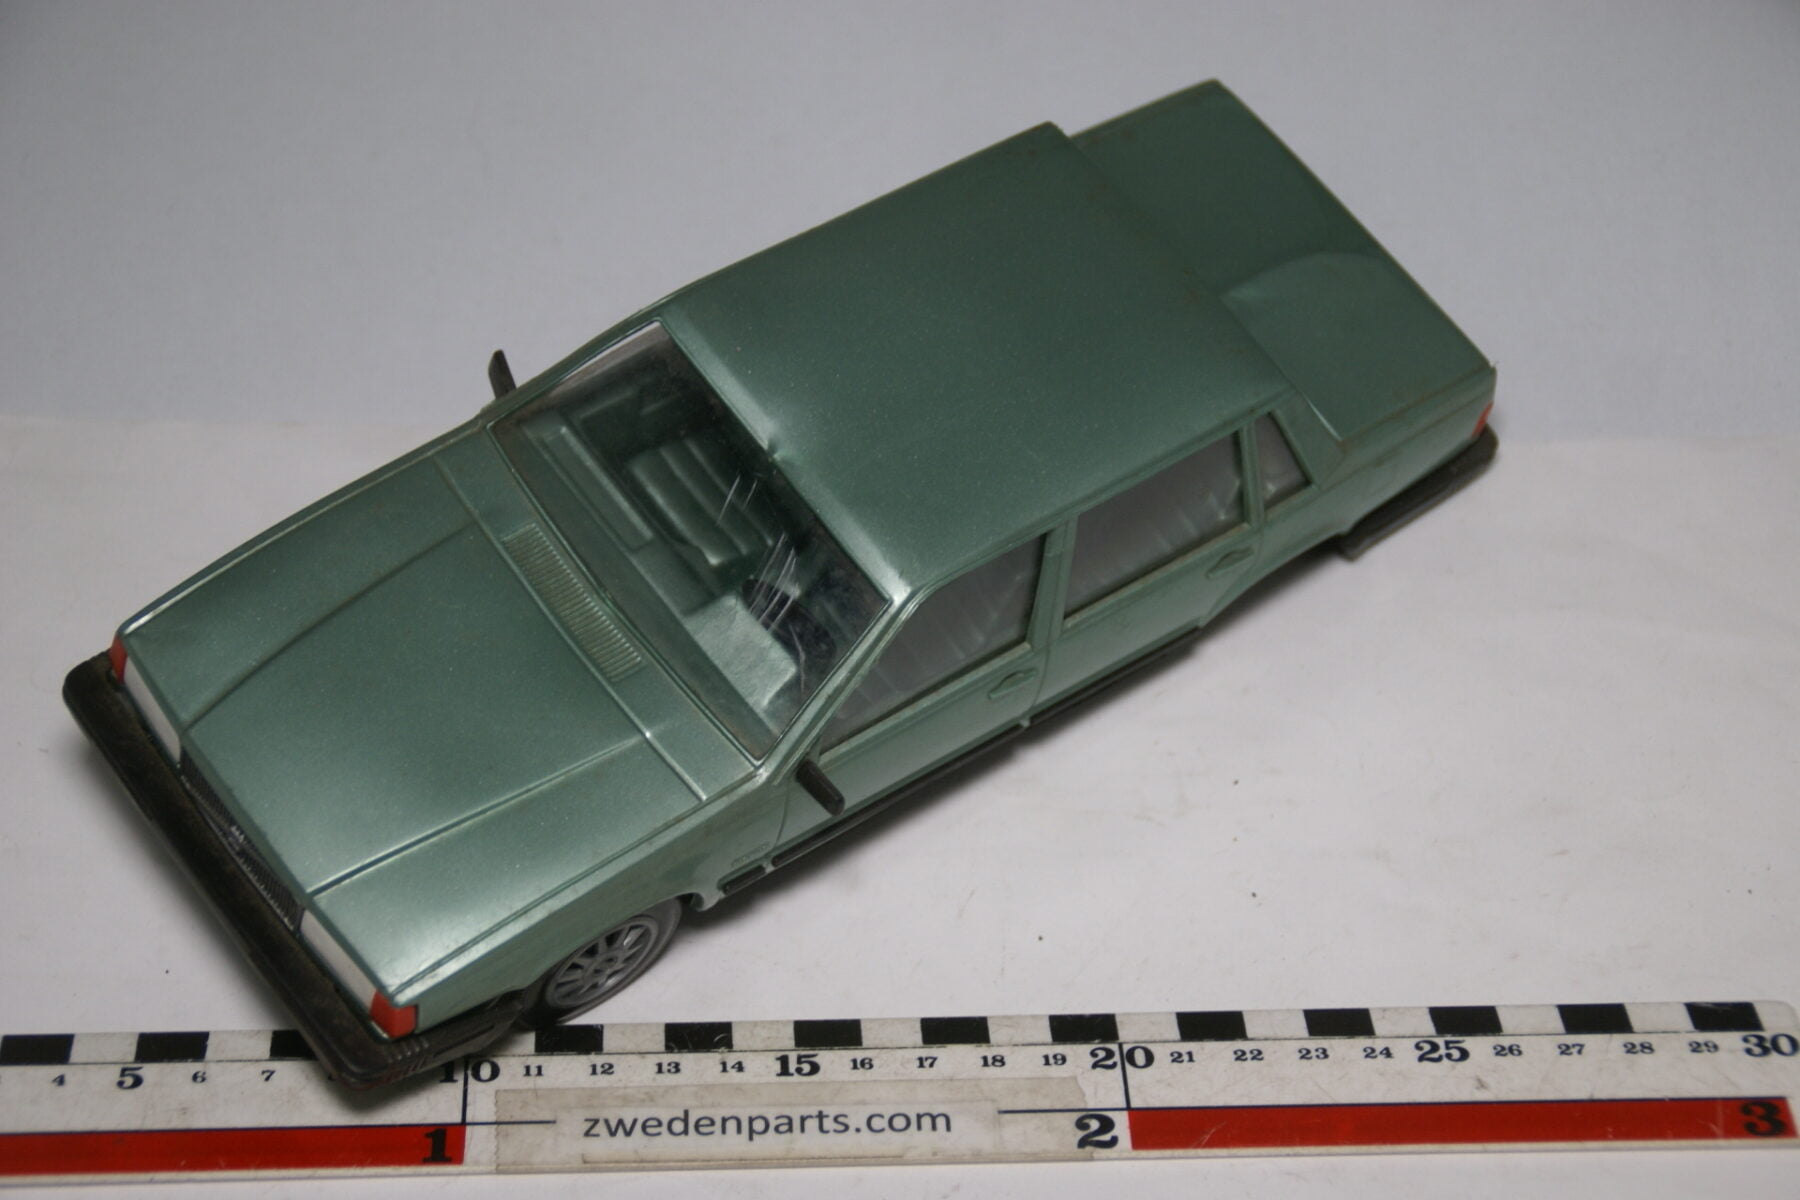 DSC09141 miniatuur Stahlberg Made in Finland Volvo 760GLE groen ca 1 op 18